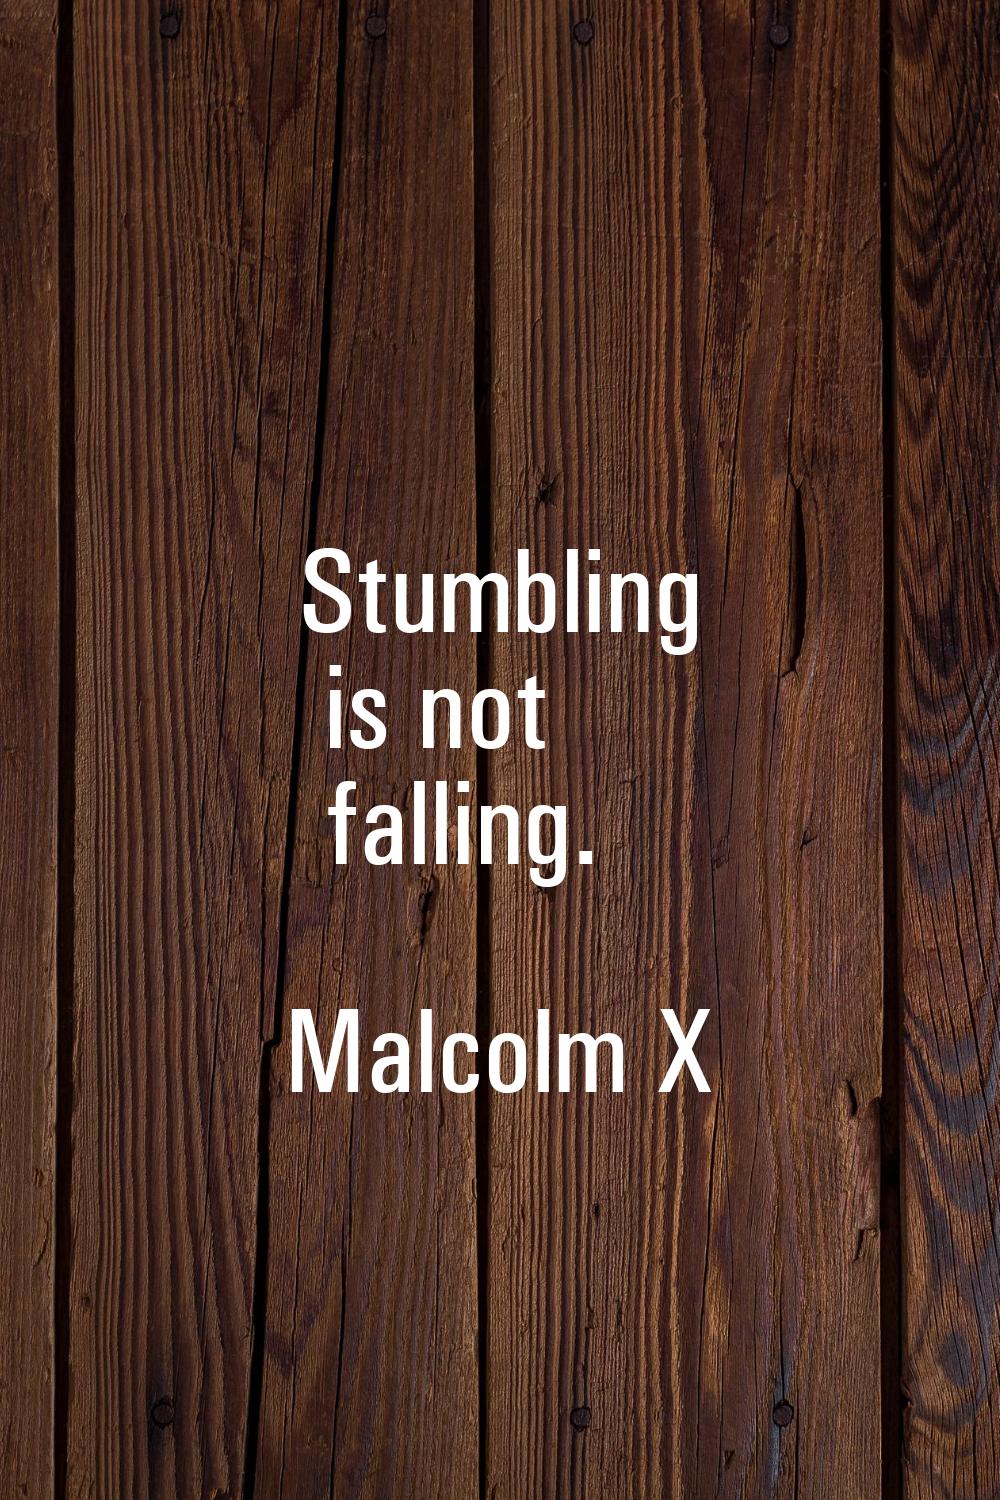 Stumbling is not falling.